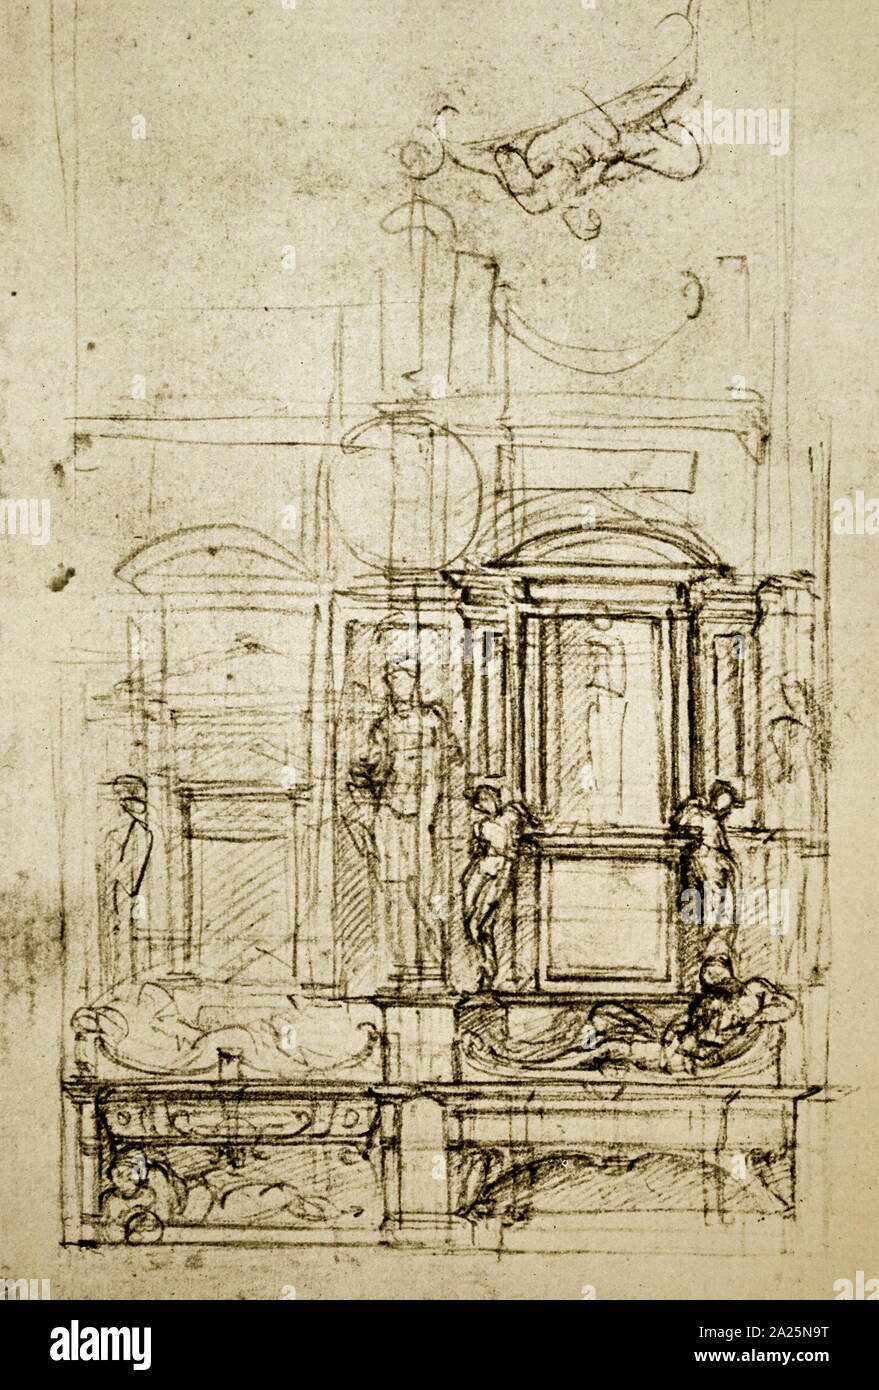 Sketch by Michelangelo. Michelangelo di Lodovico Buonarroti Simoni (1475-1564) an Italian sculptor, painter, architect and poet of the High Renaissance. Stock Photo